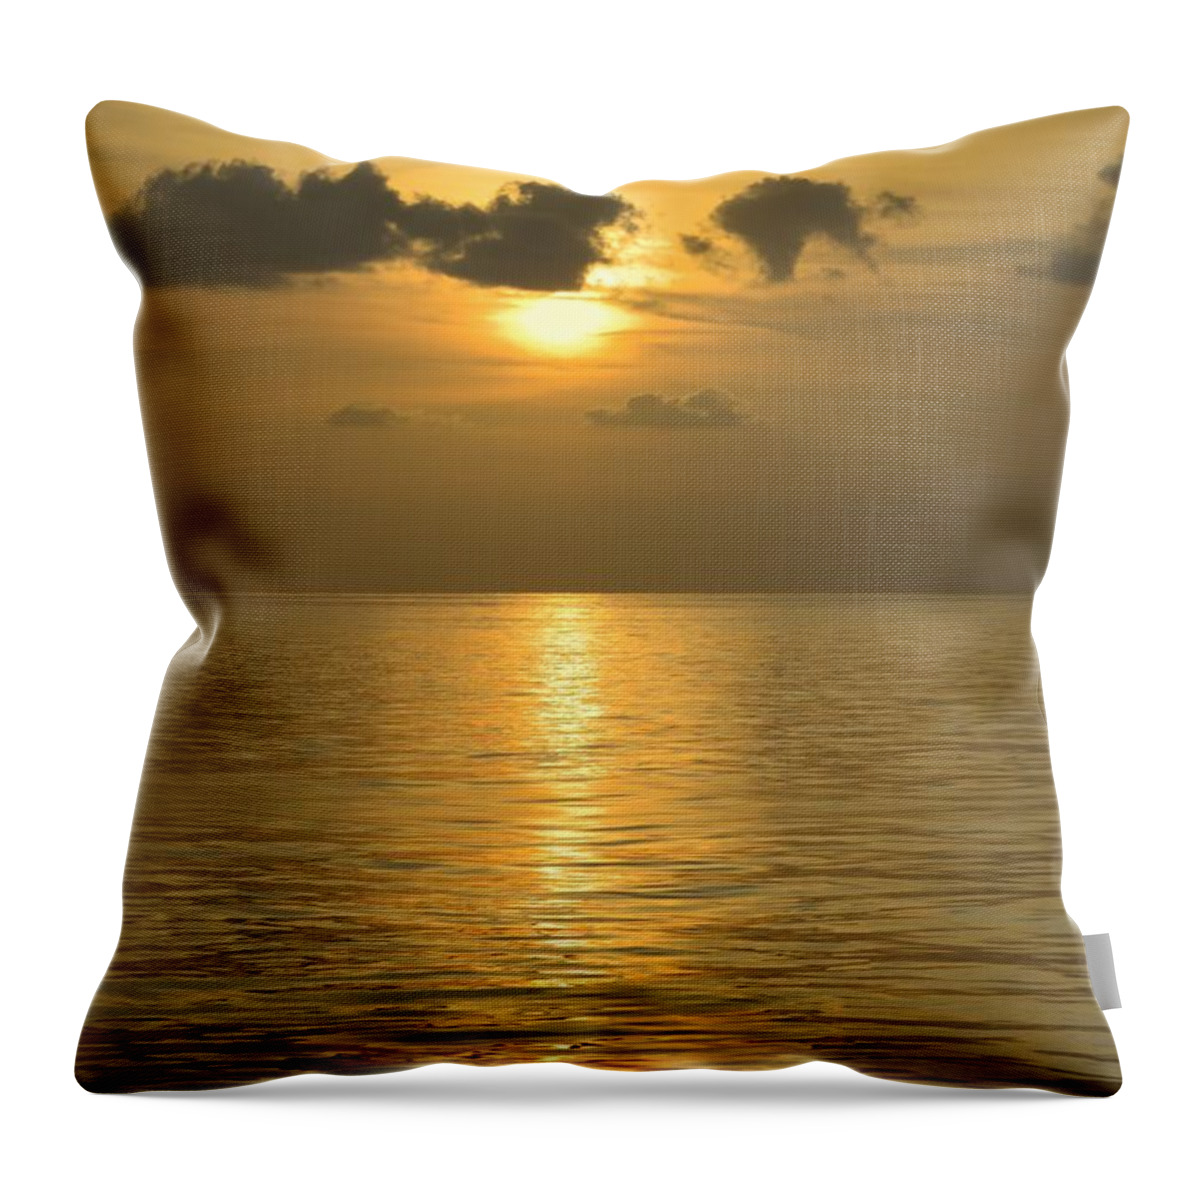 Seascape Throw Pillow featuring the photograph Golden sea by Bradford Martin